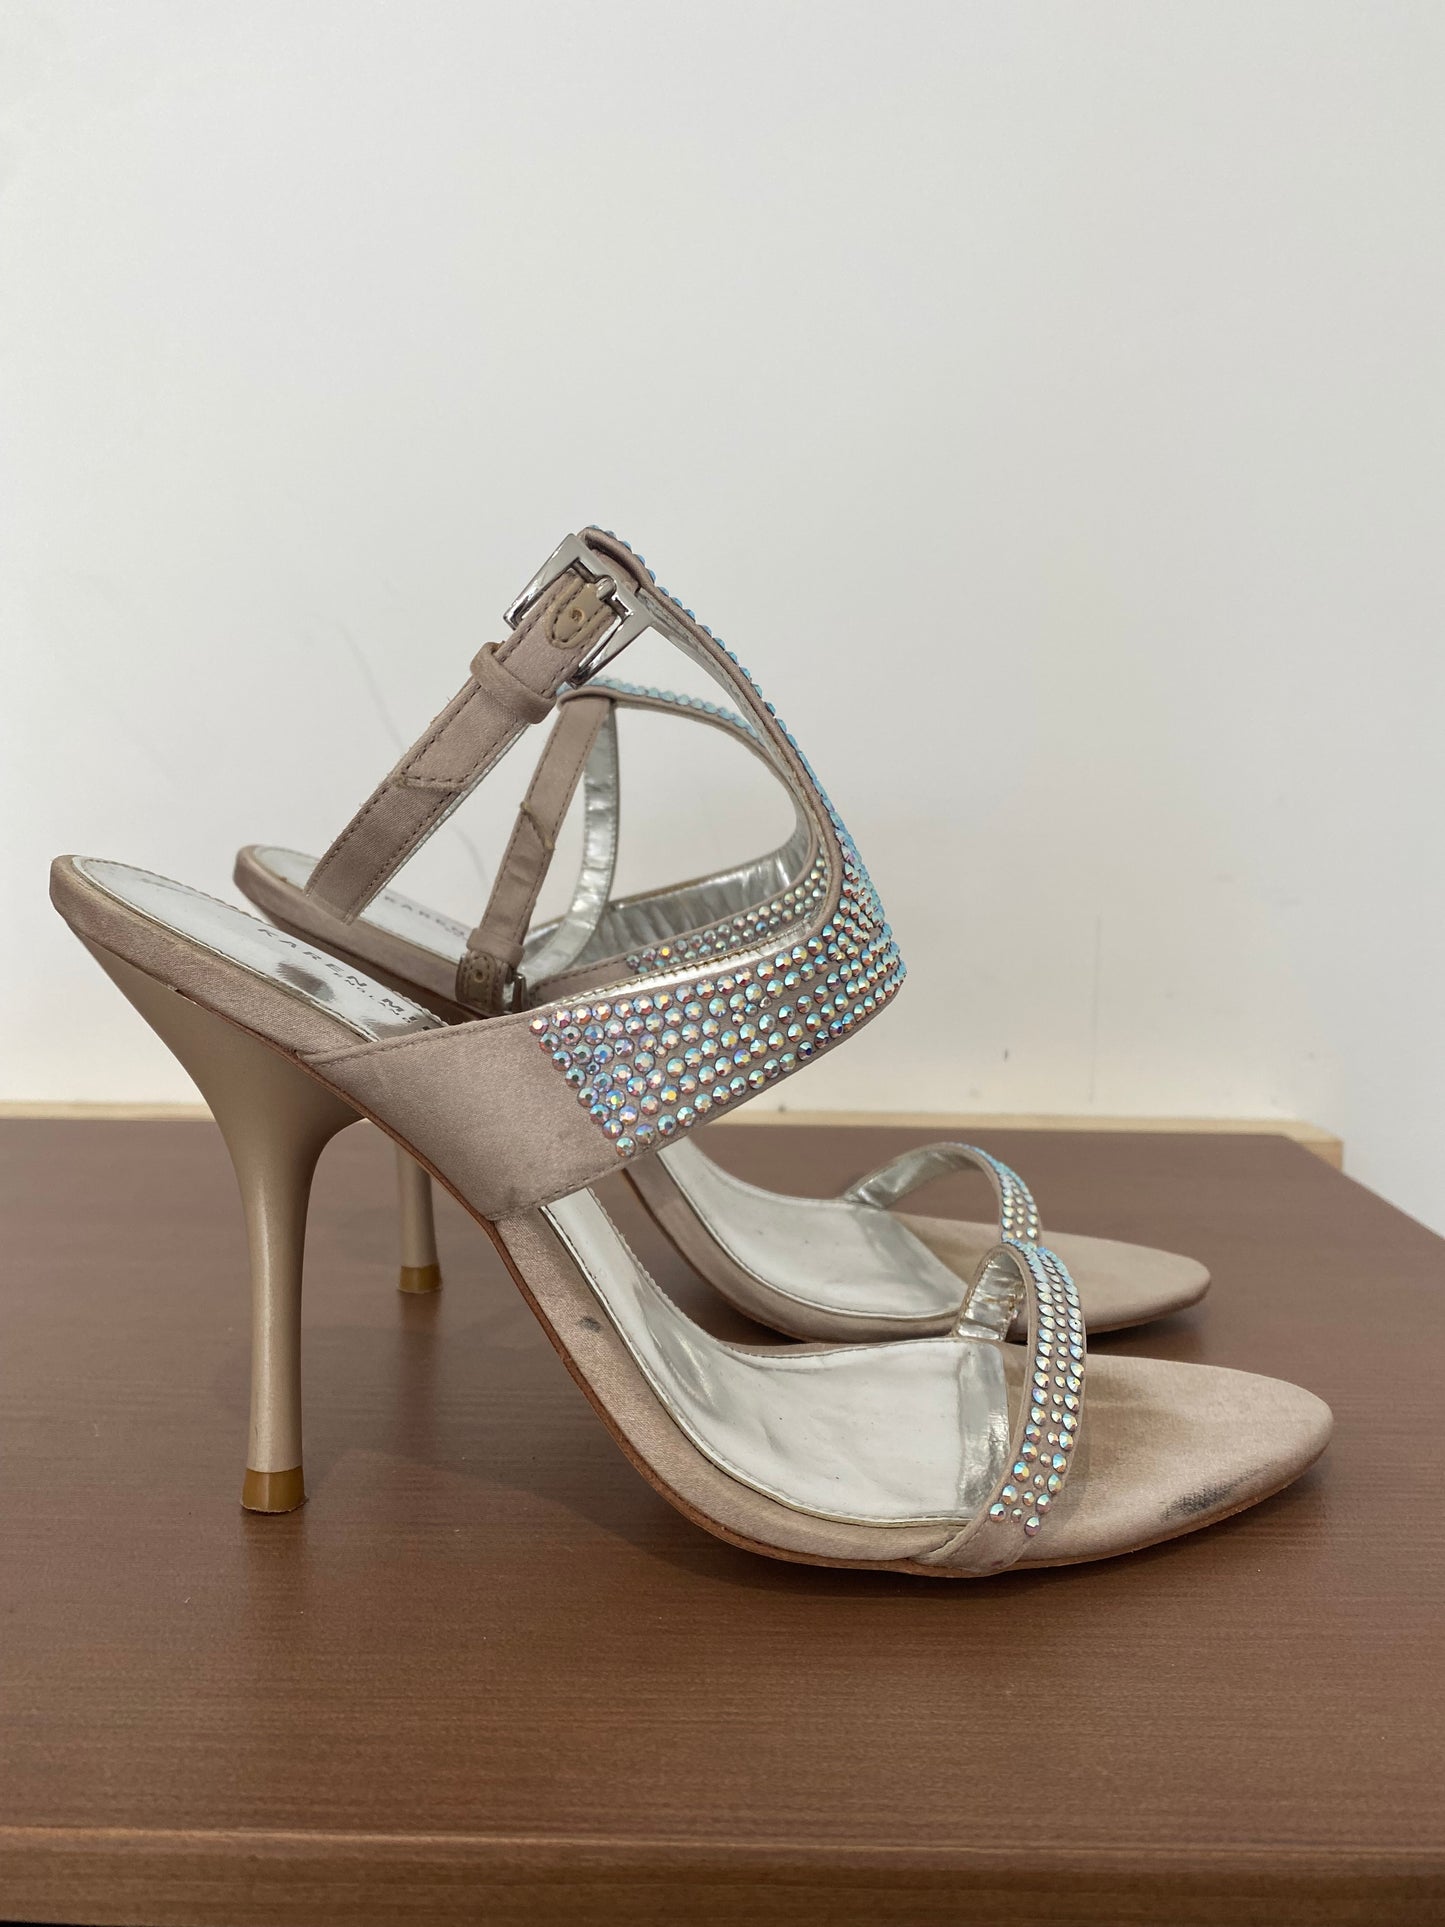 Karen Millen Diamanté Heeled Sandals Size 5